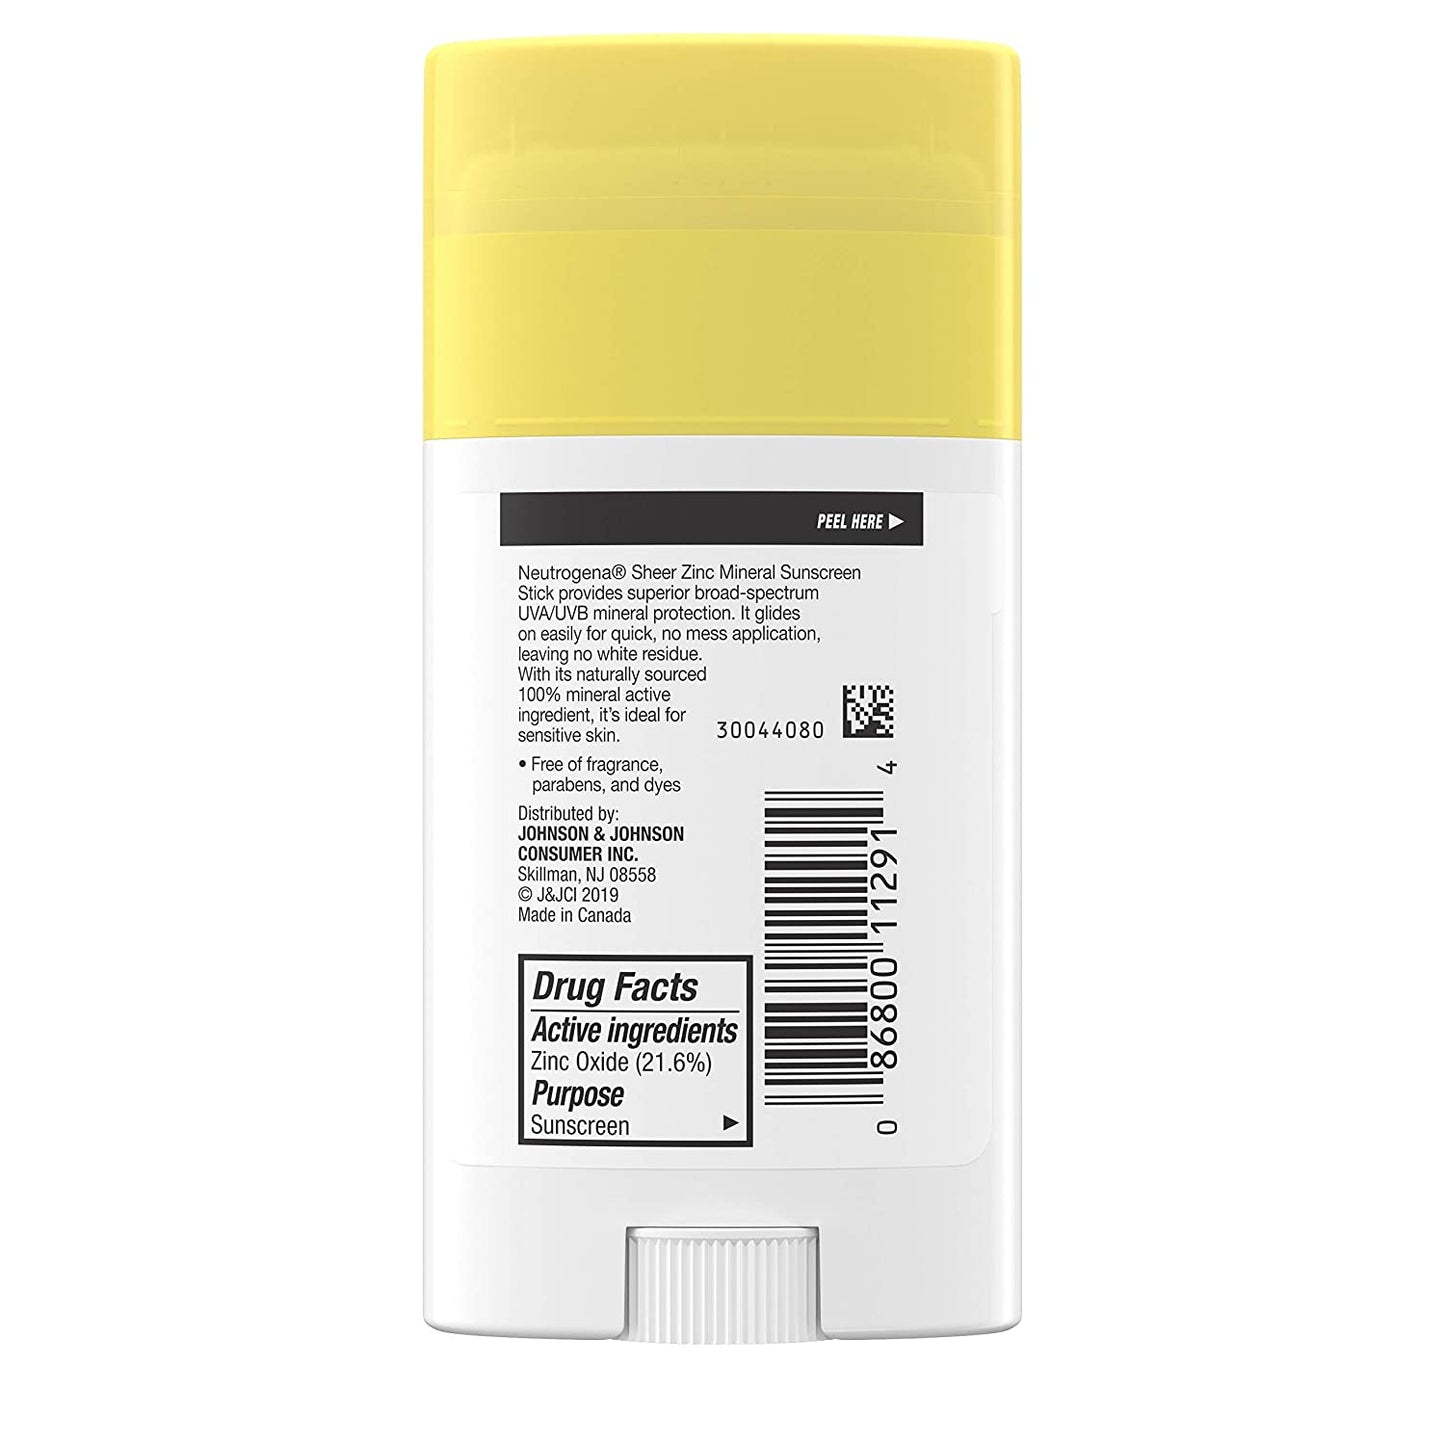 Neutrogena Sheer Zinc Oxide Mineral Sunscreen Stick with Vitamin E SPF 50+ UVA/UVB Protection 1.5 oz. 42 g